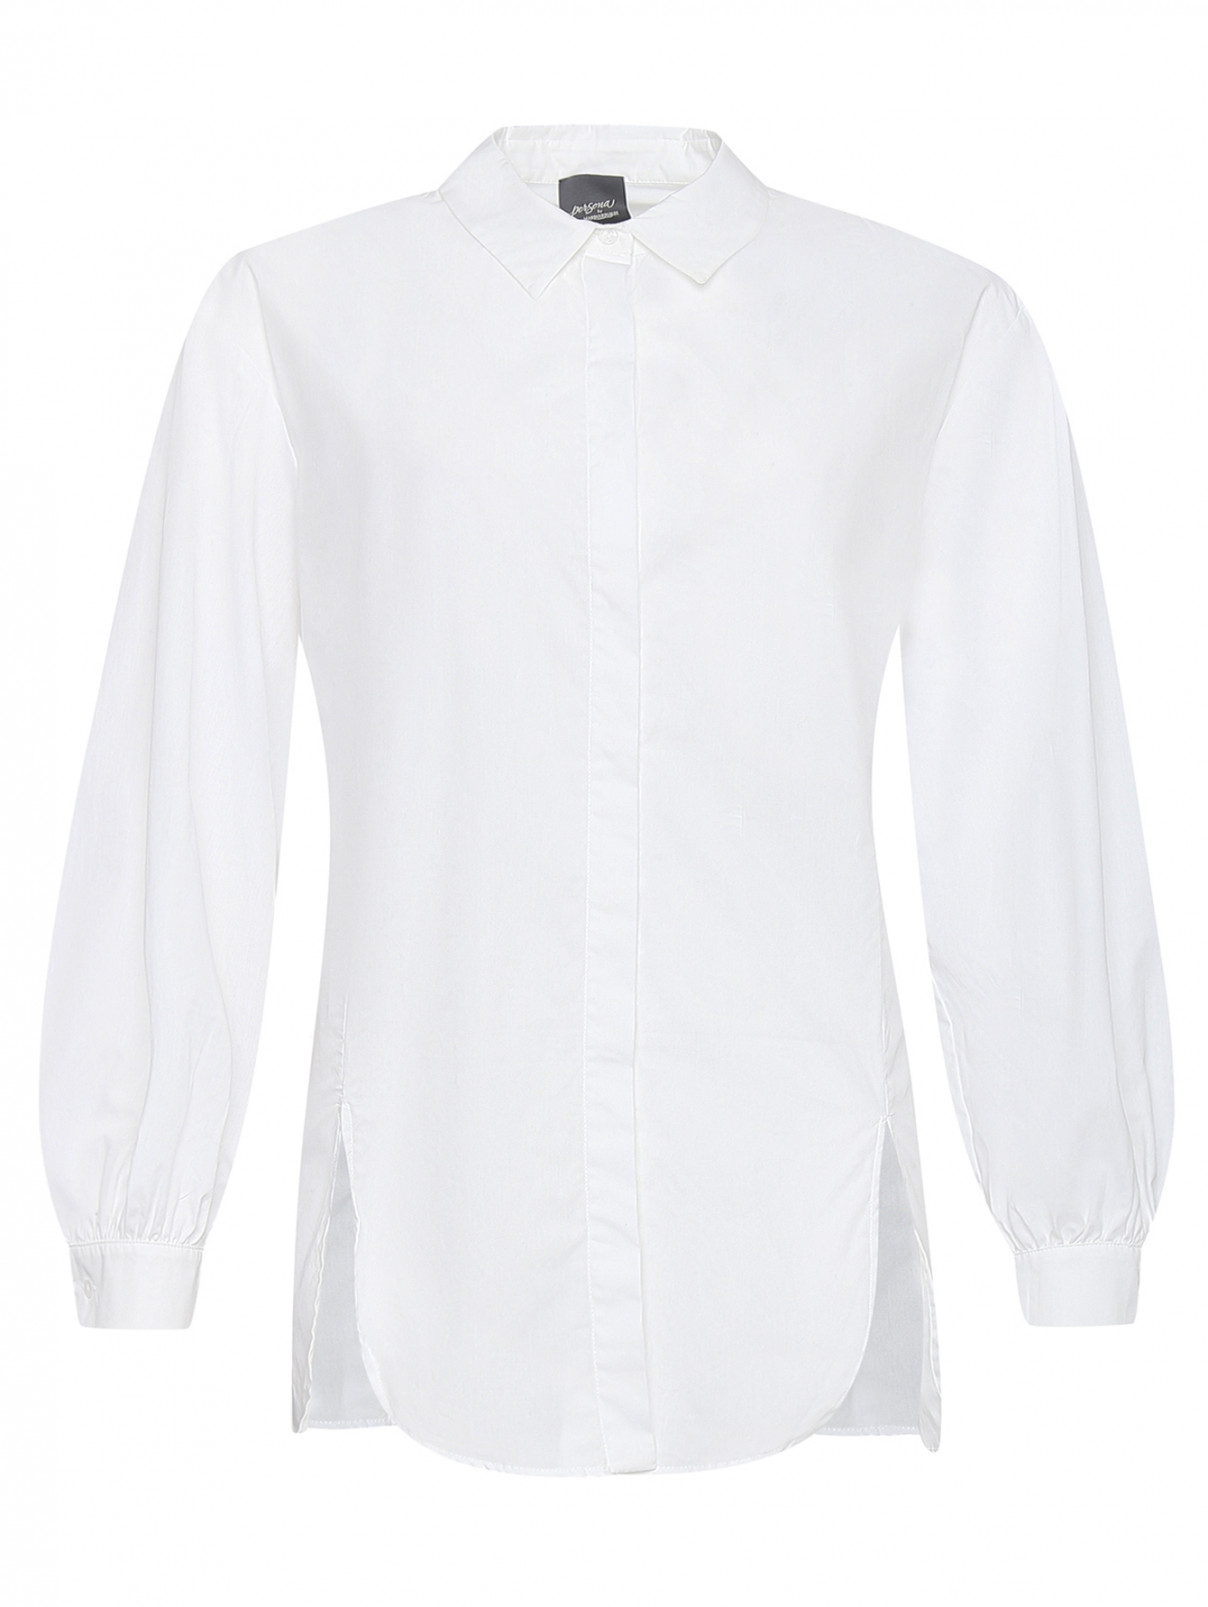 Базовая рубашка из хлопка Persona by Marina Rinaldi  –  Общий вид  – Цвет:  Белый